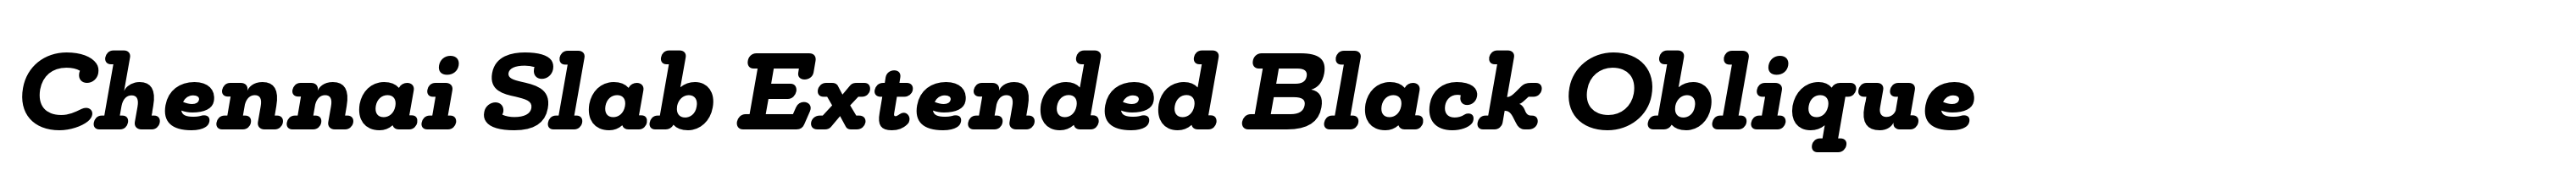 Chennai Slab Extended Black Oblique